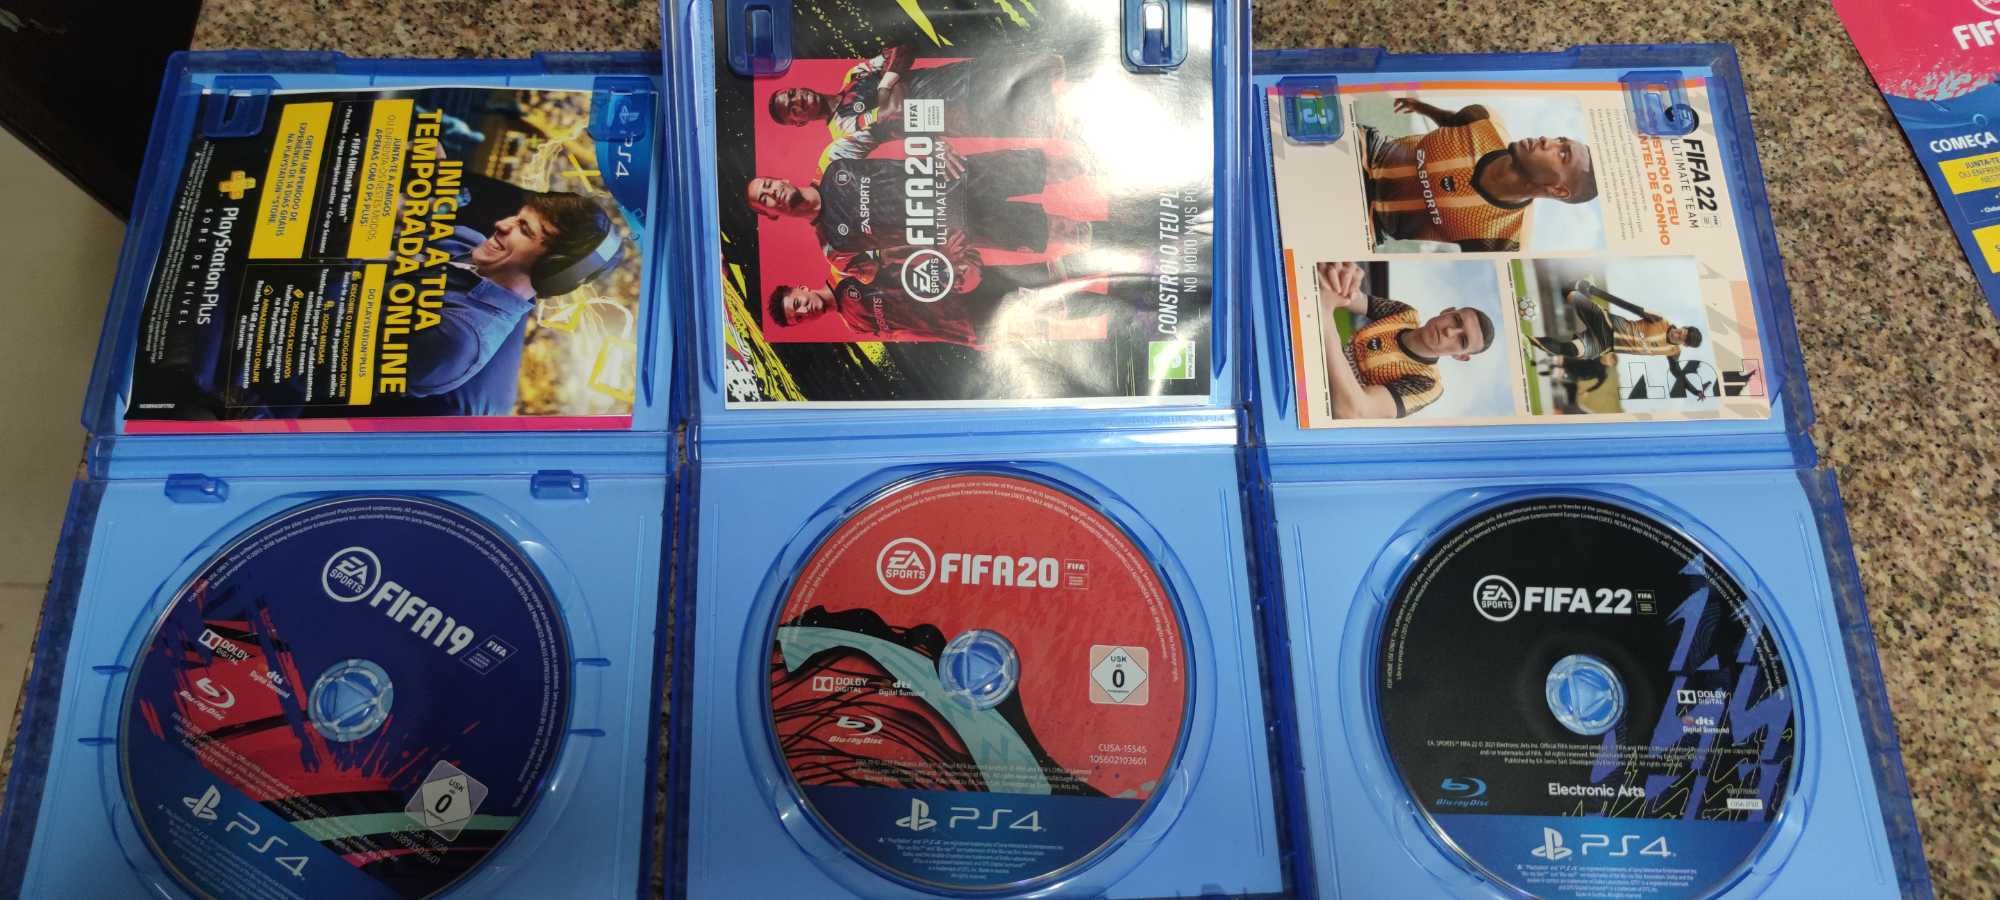 Jogos PS4 FIFA FIFA 20 e FIFA 19